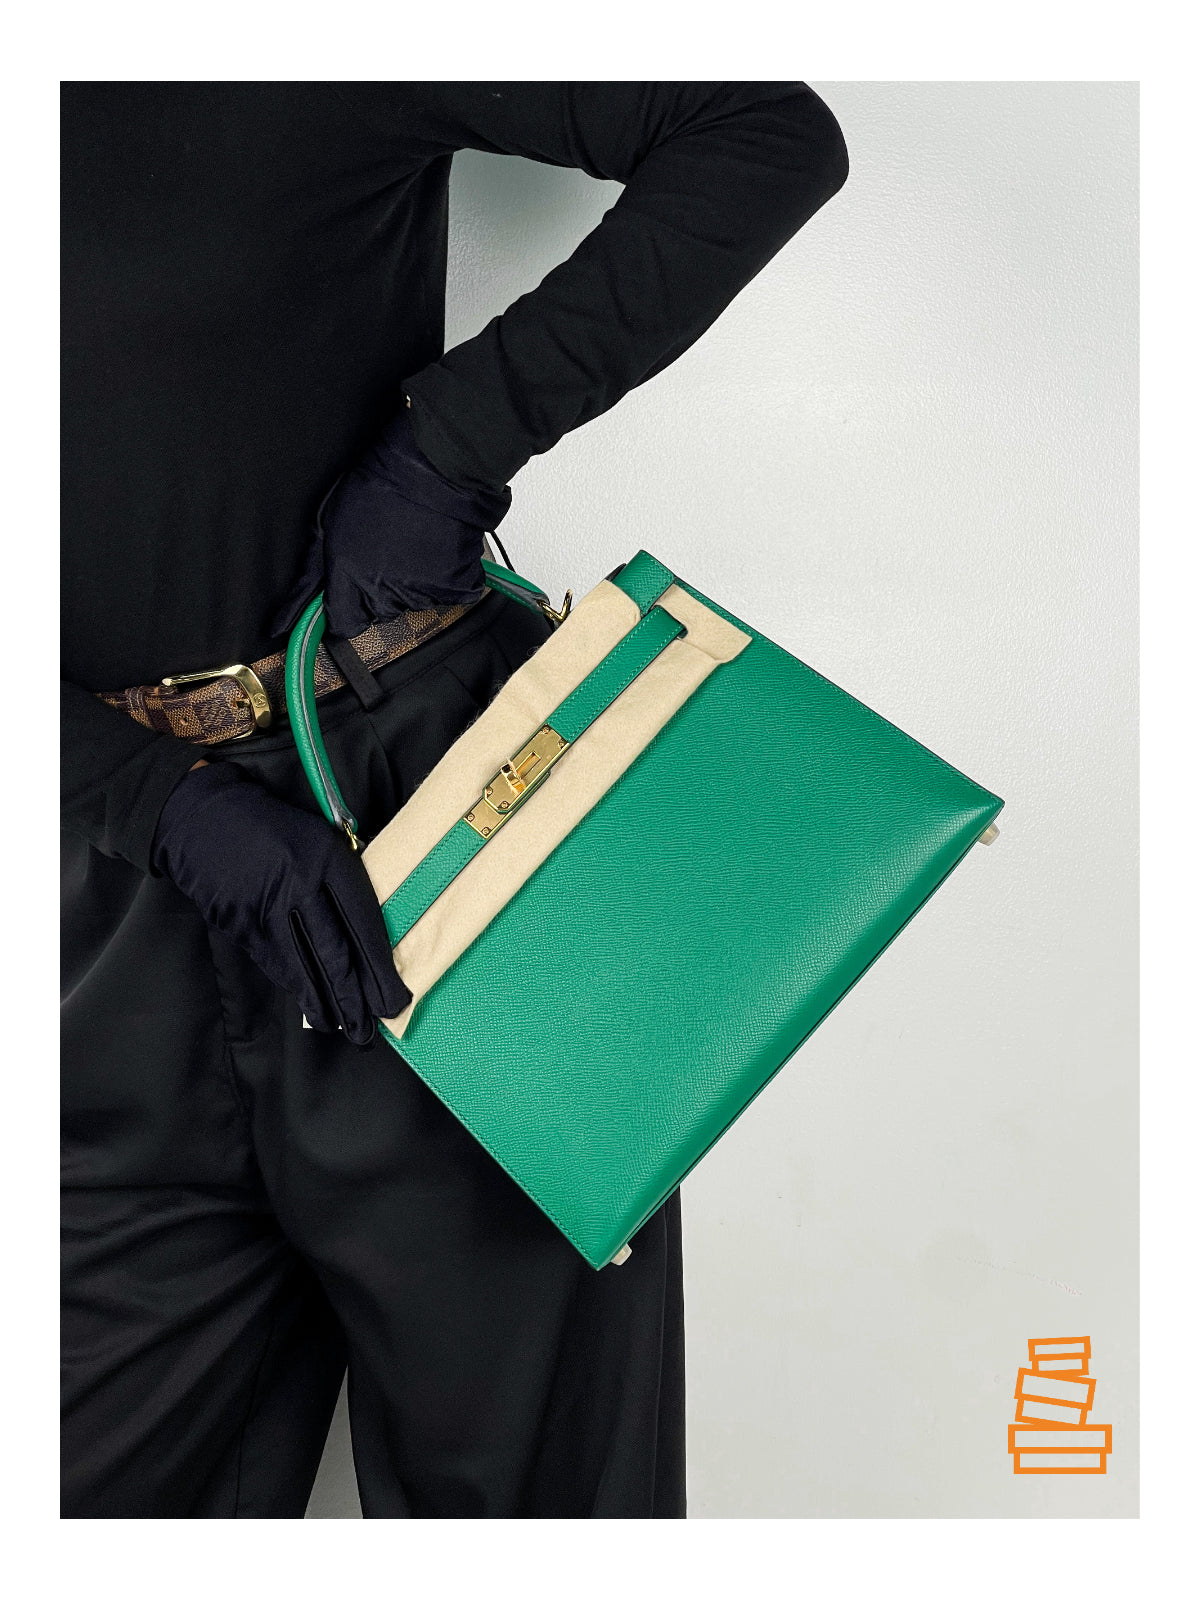 Hermes Birkin 30 Backpocket – The Orange Box PH